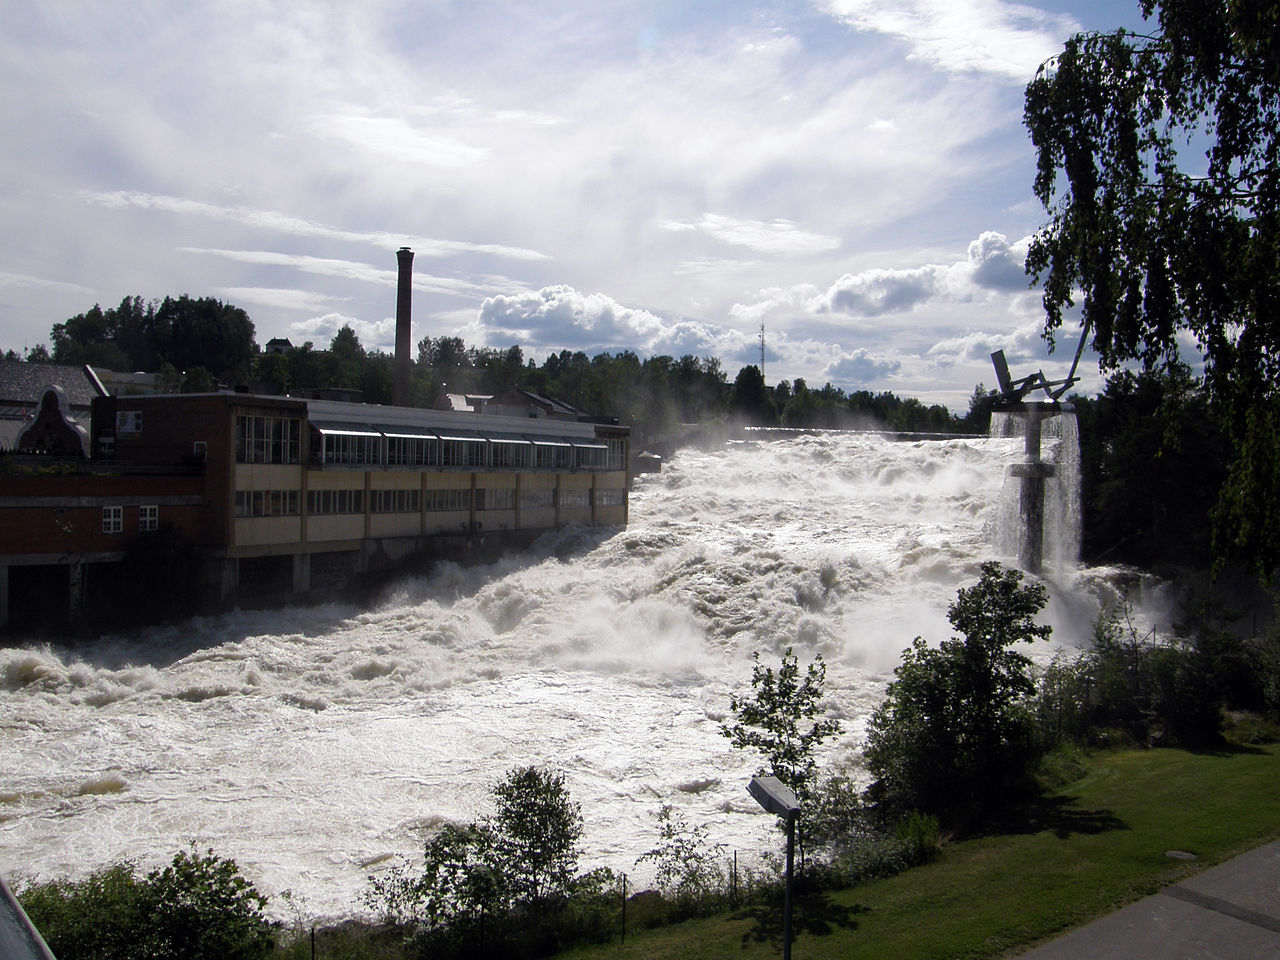 Hønefossen under the 20 years flood in July 2007.